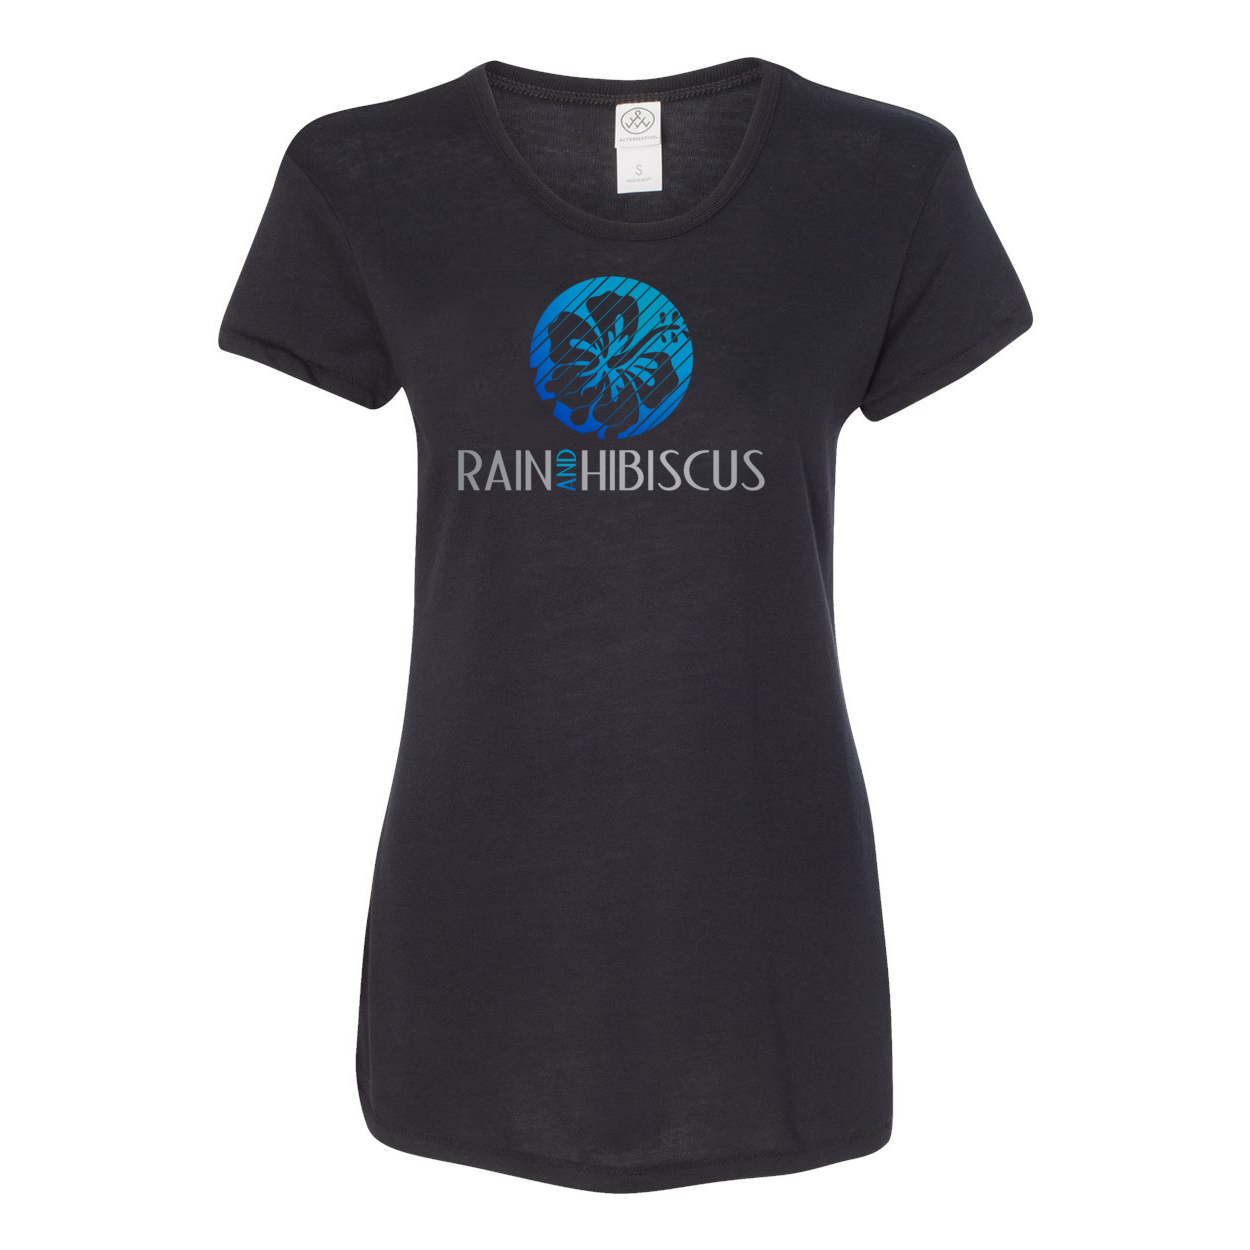 Women's Vintage 50/50 Jersey Keepsake T-Shirt - Rain & Hibiscus